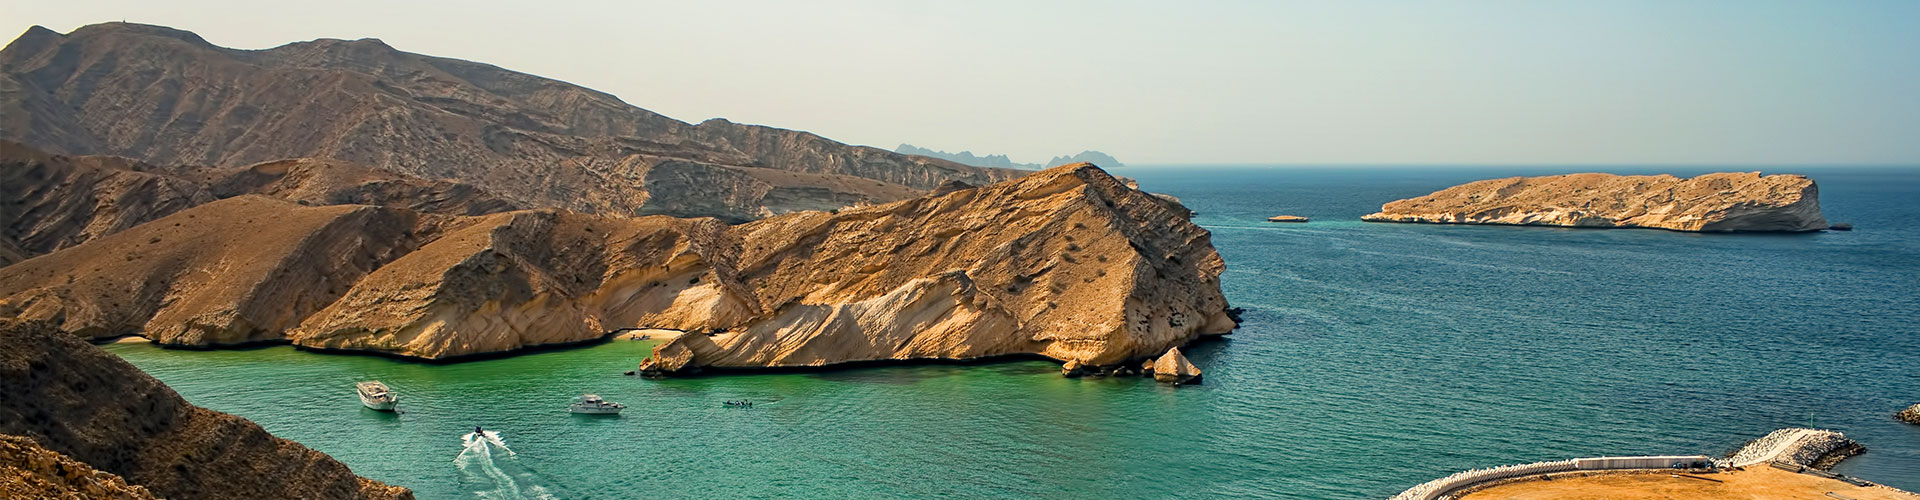 Oman itinerary 03